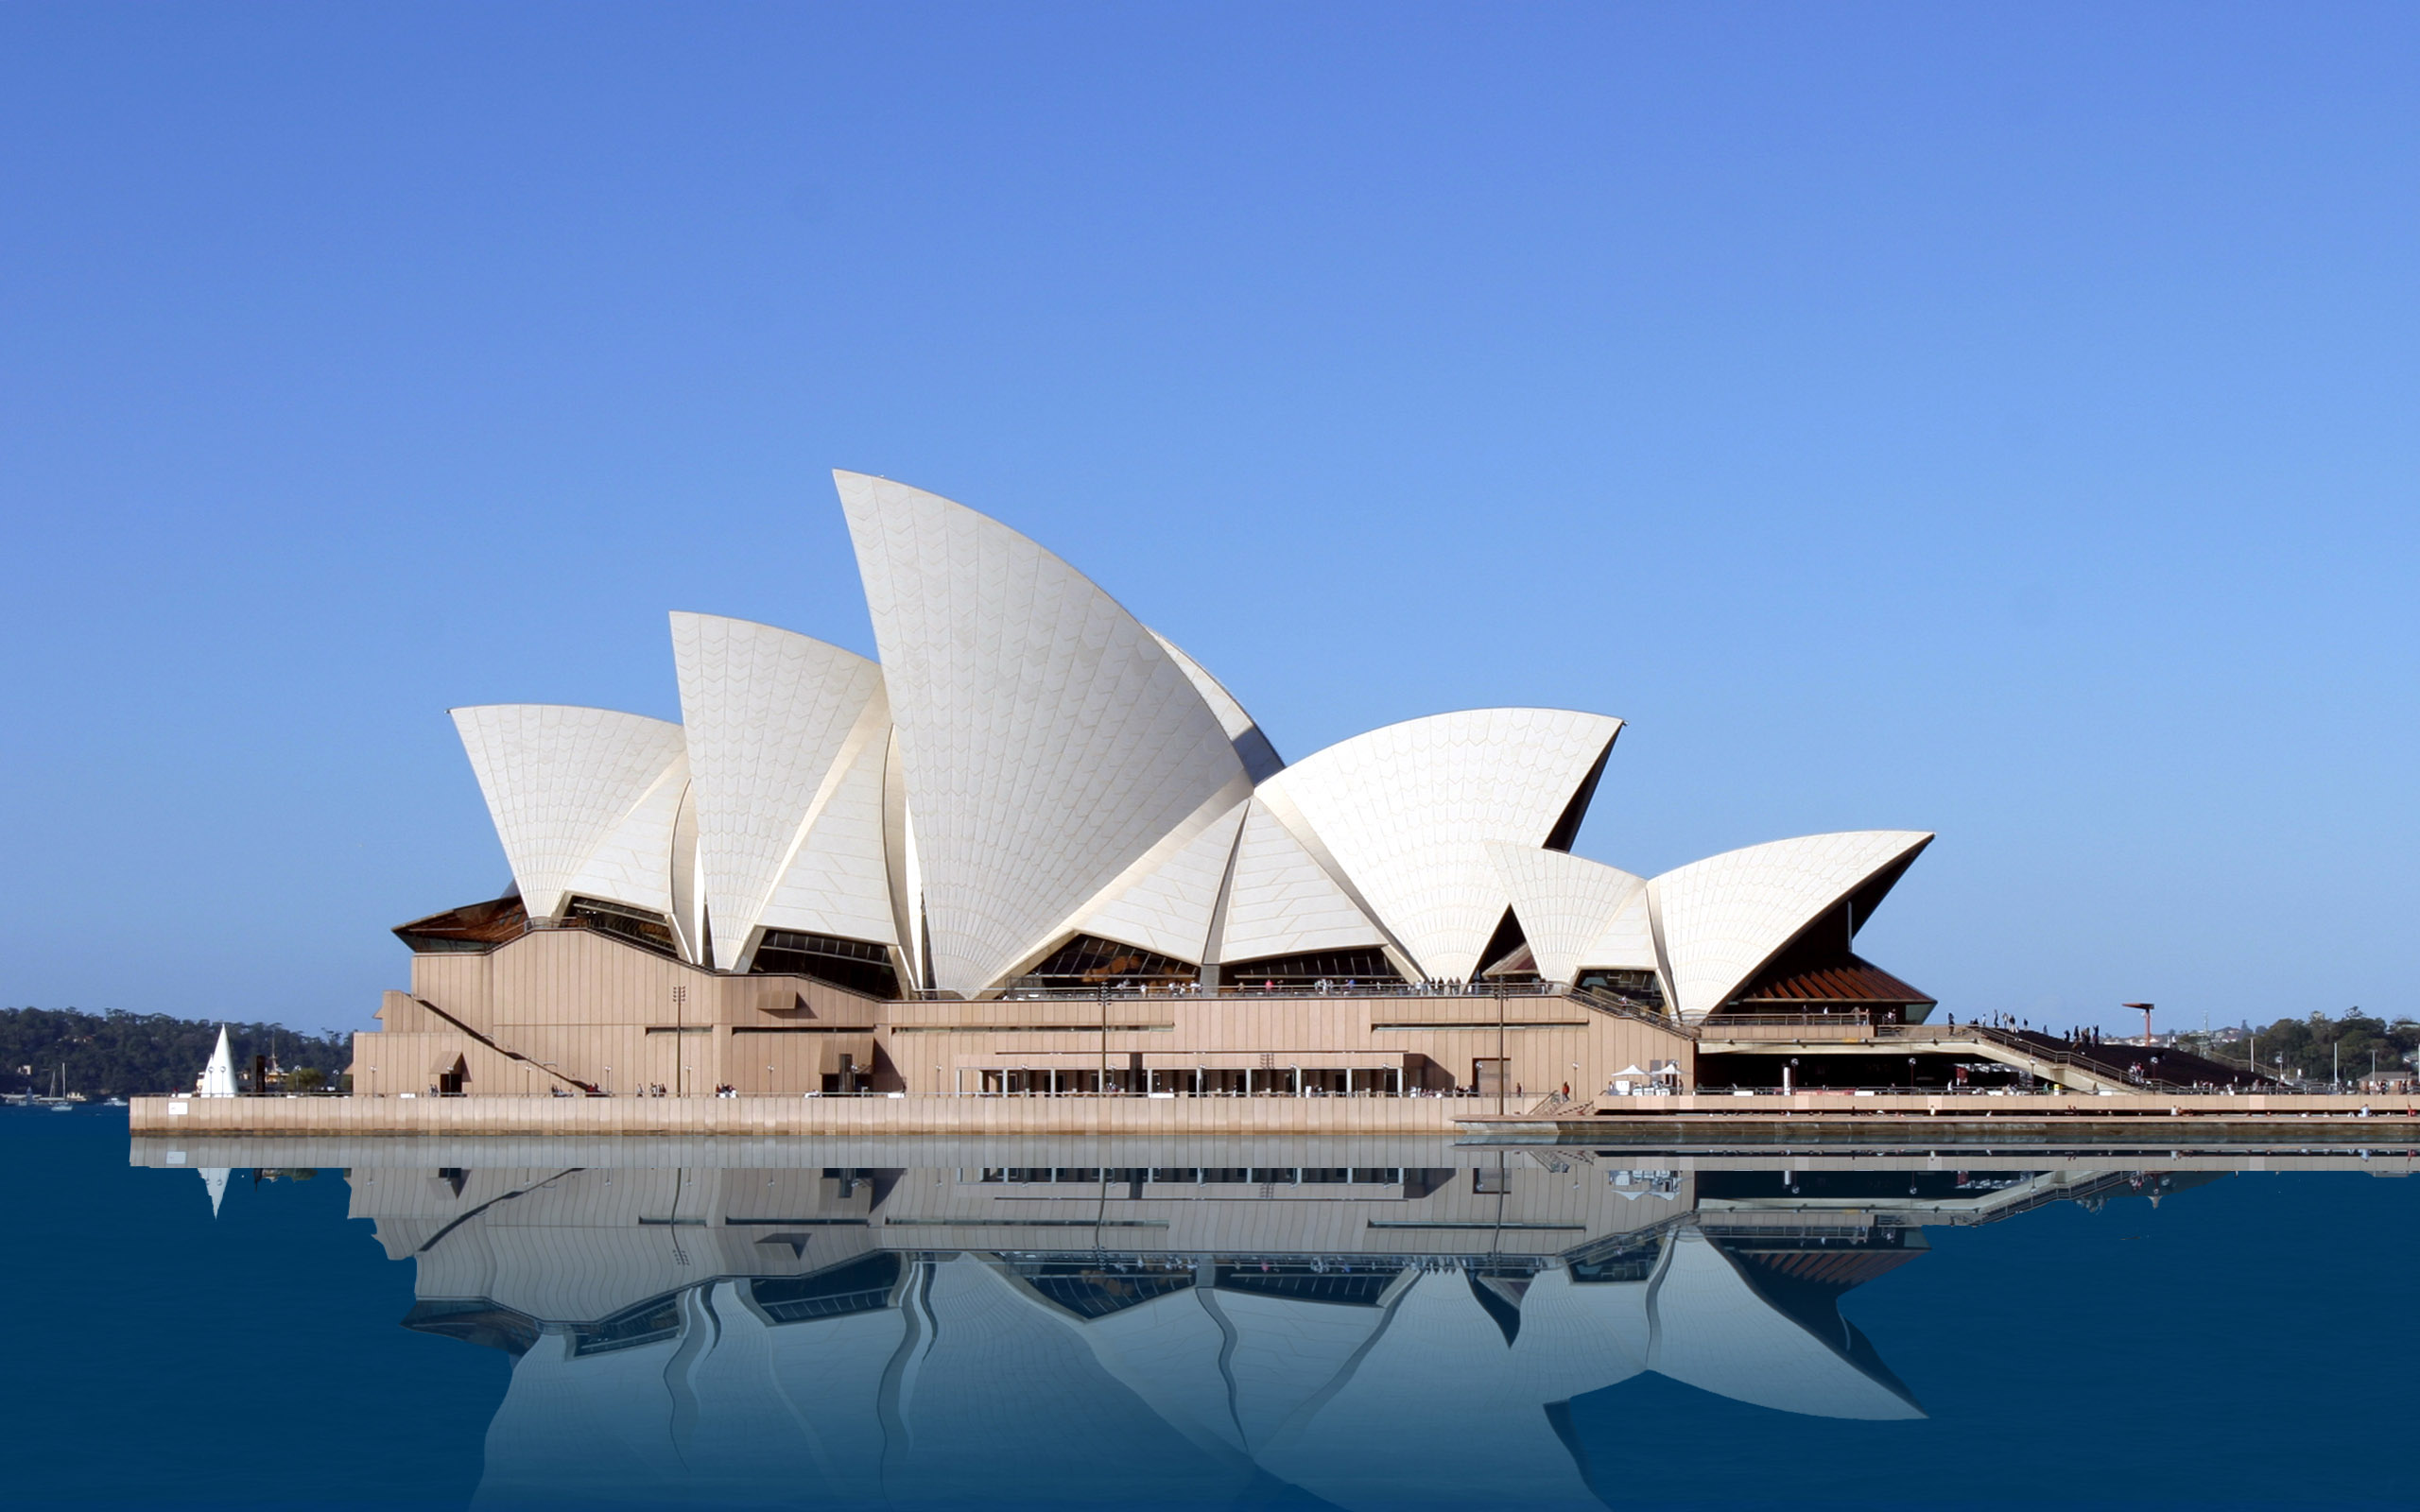 Sydney Australia Opera House